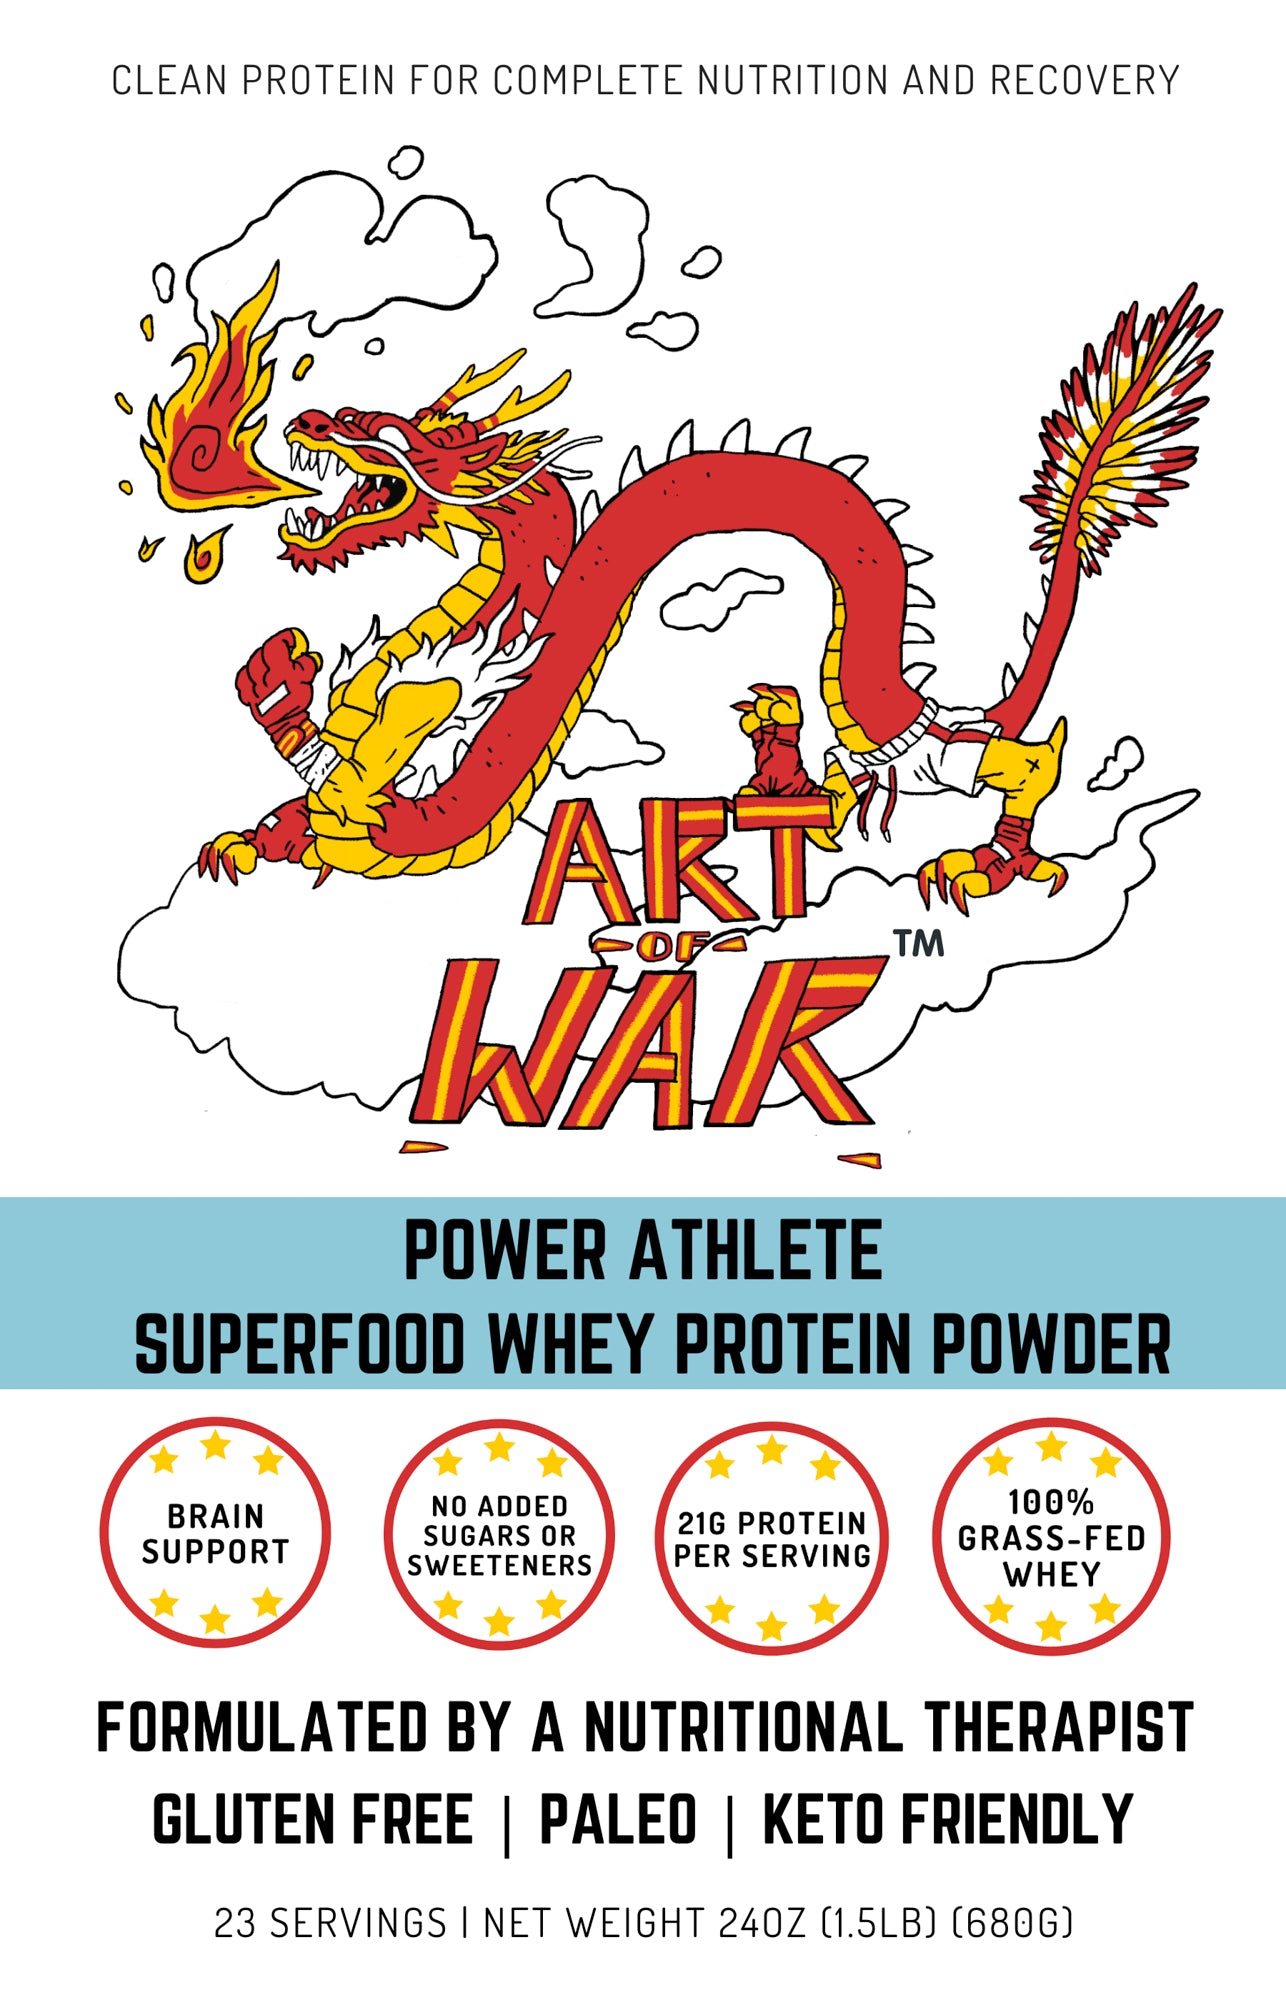 Power Athlete - Superfood Whey Protein Powder